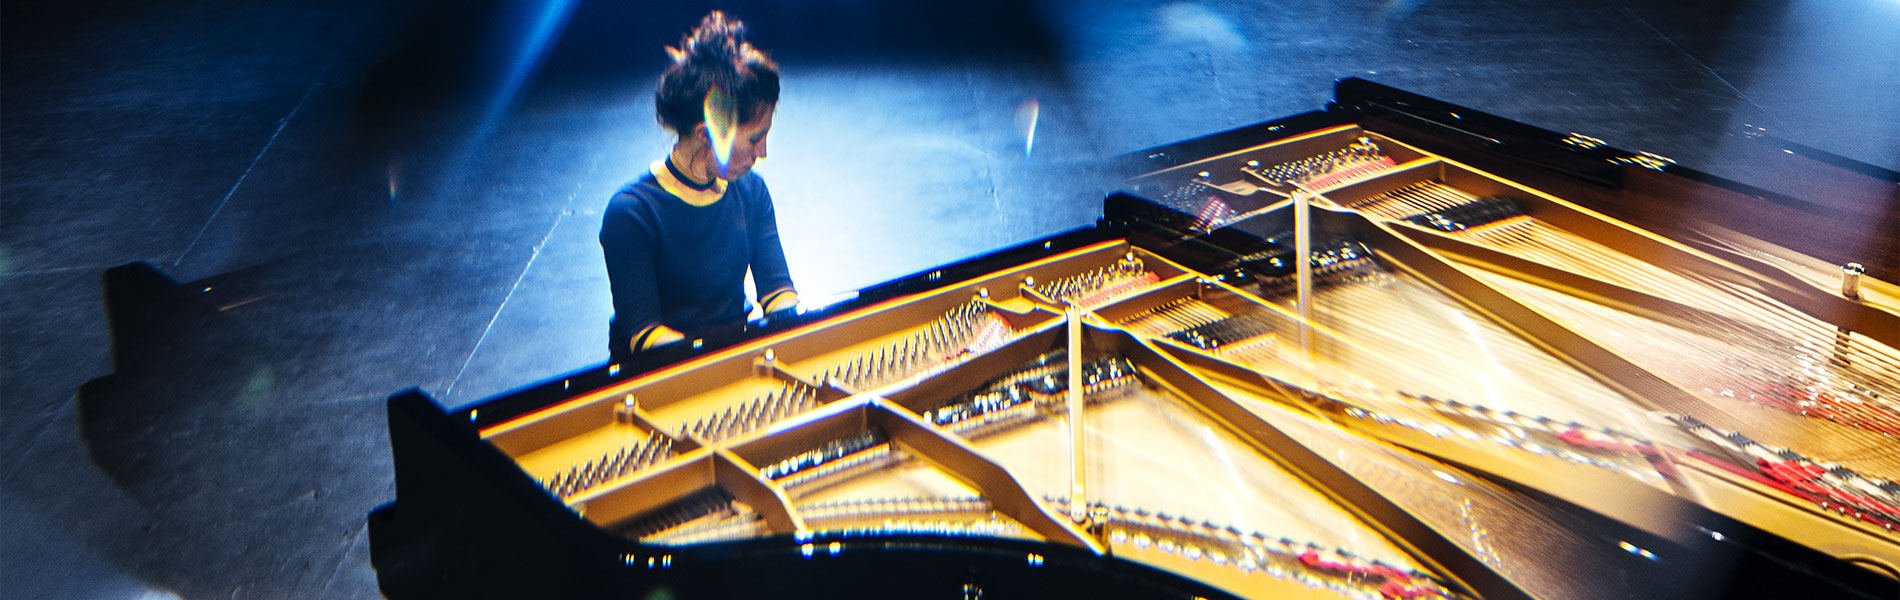 Piano Solo - Madeleine Cazenave - Photo de Sylvain Gripoix